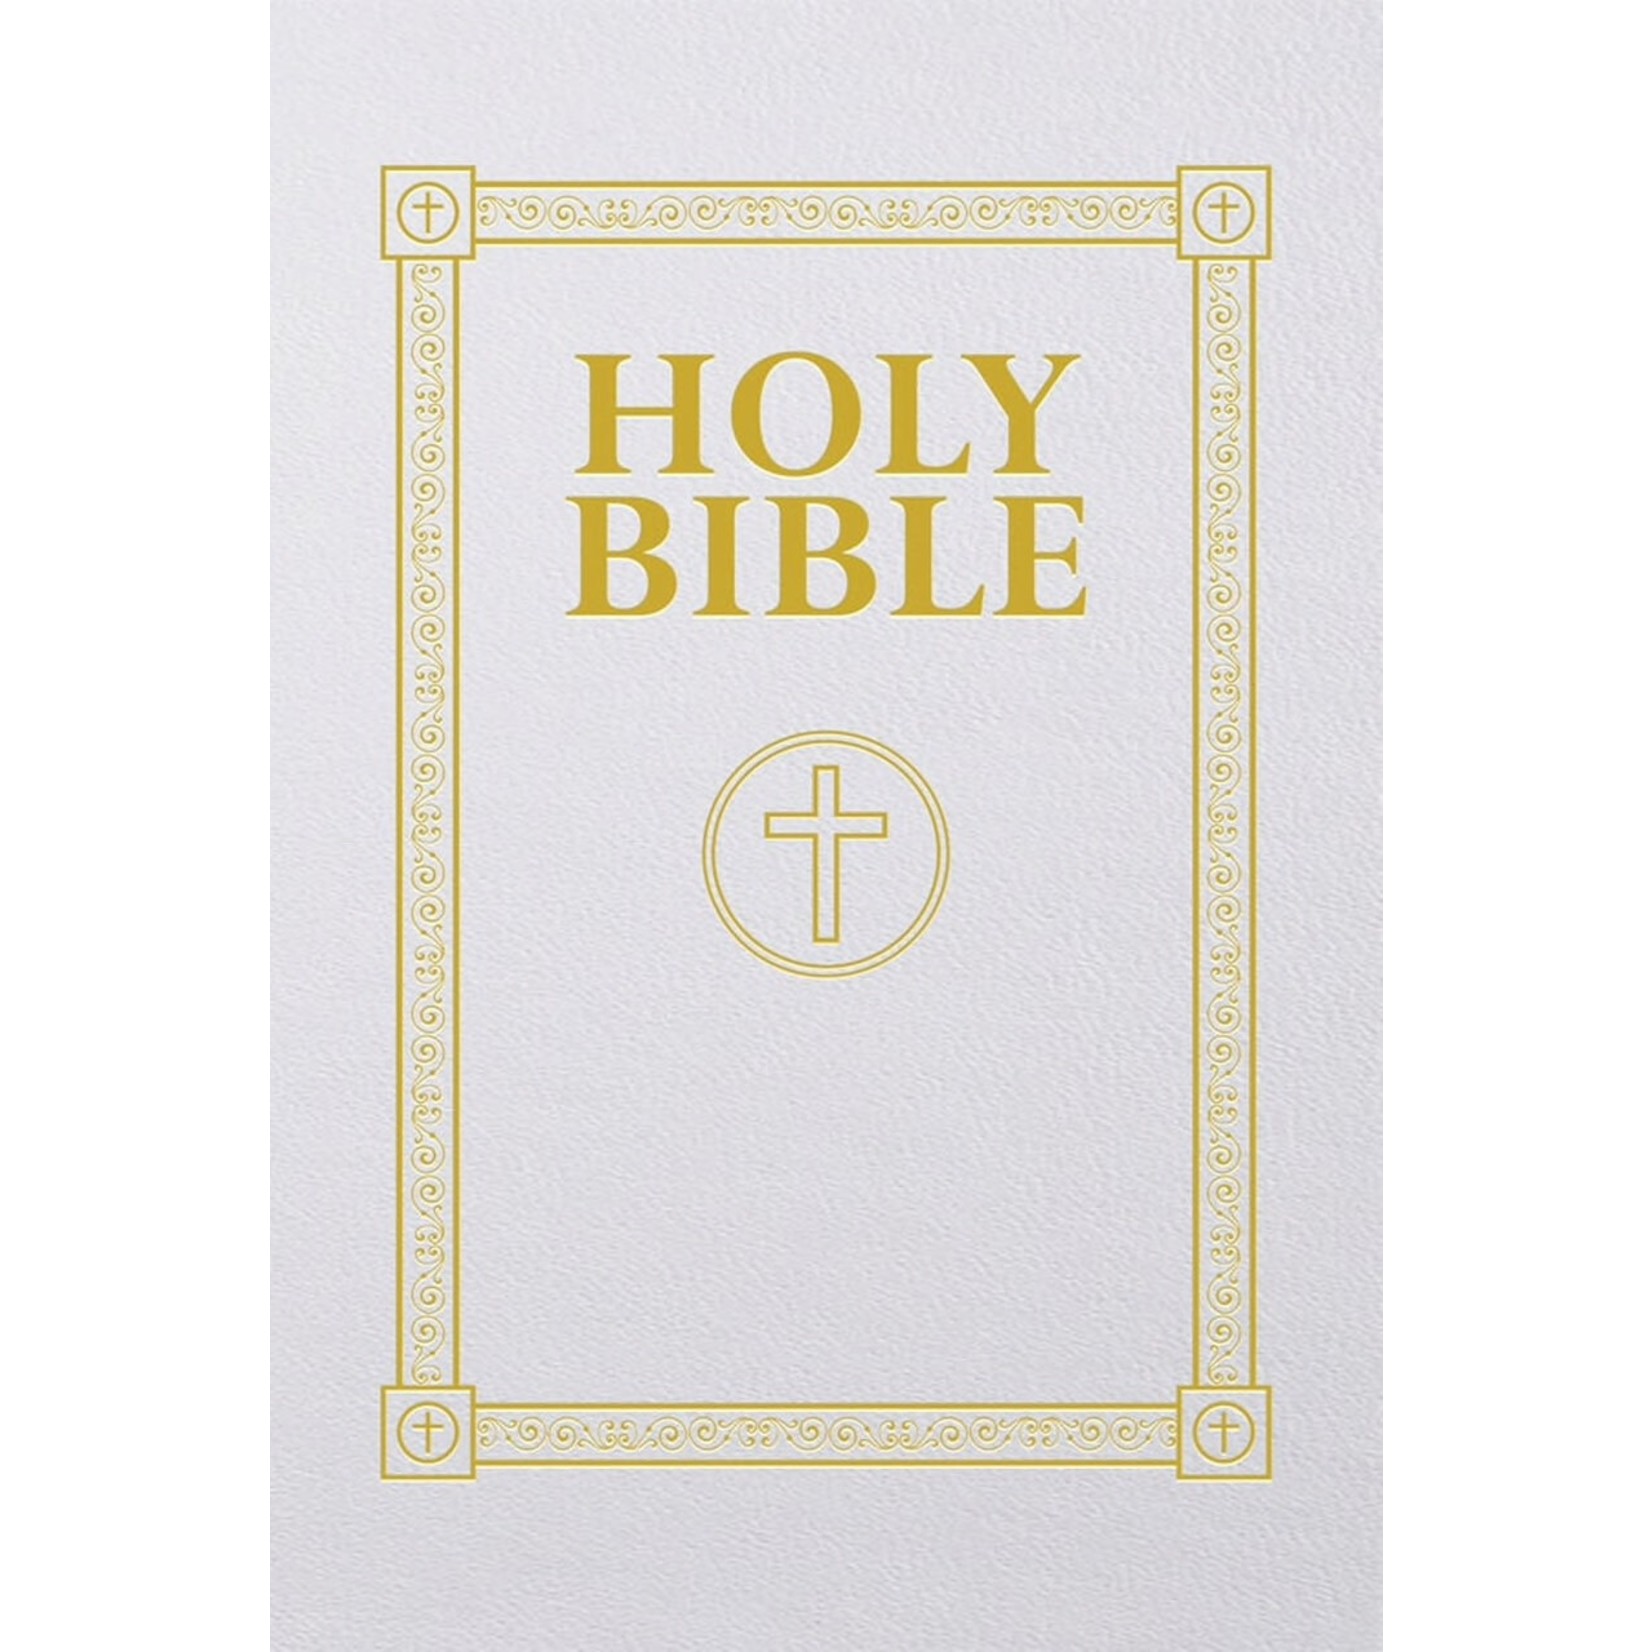 Douay-Rheims First Communion Bible Hardcover